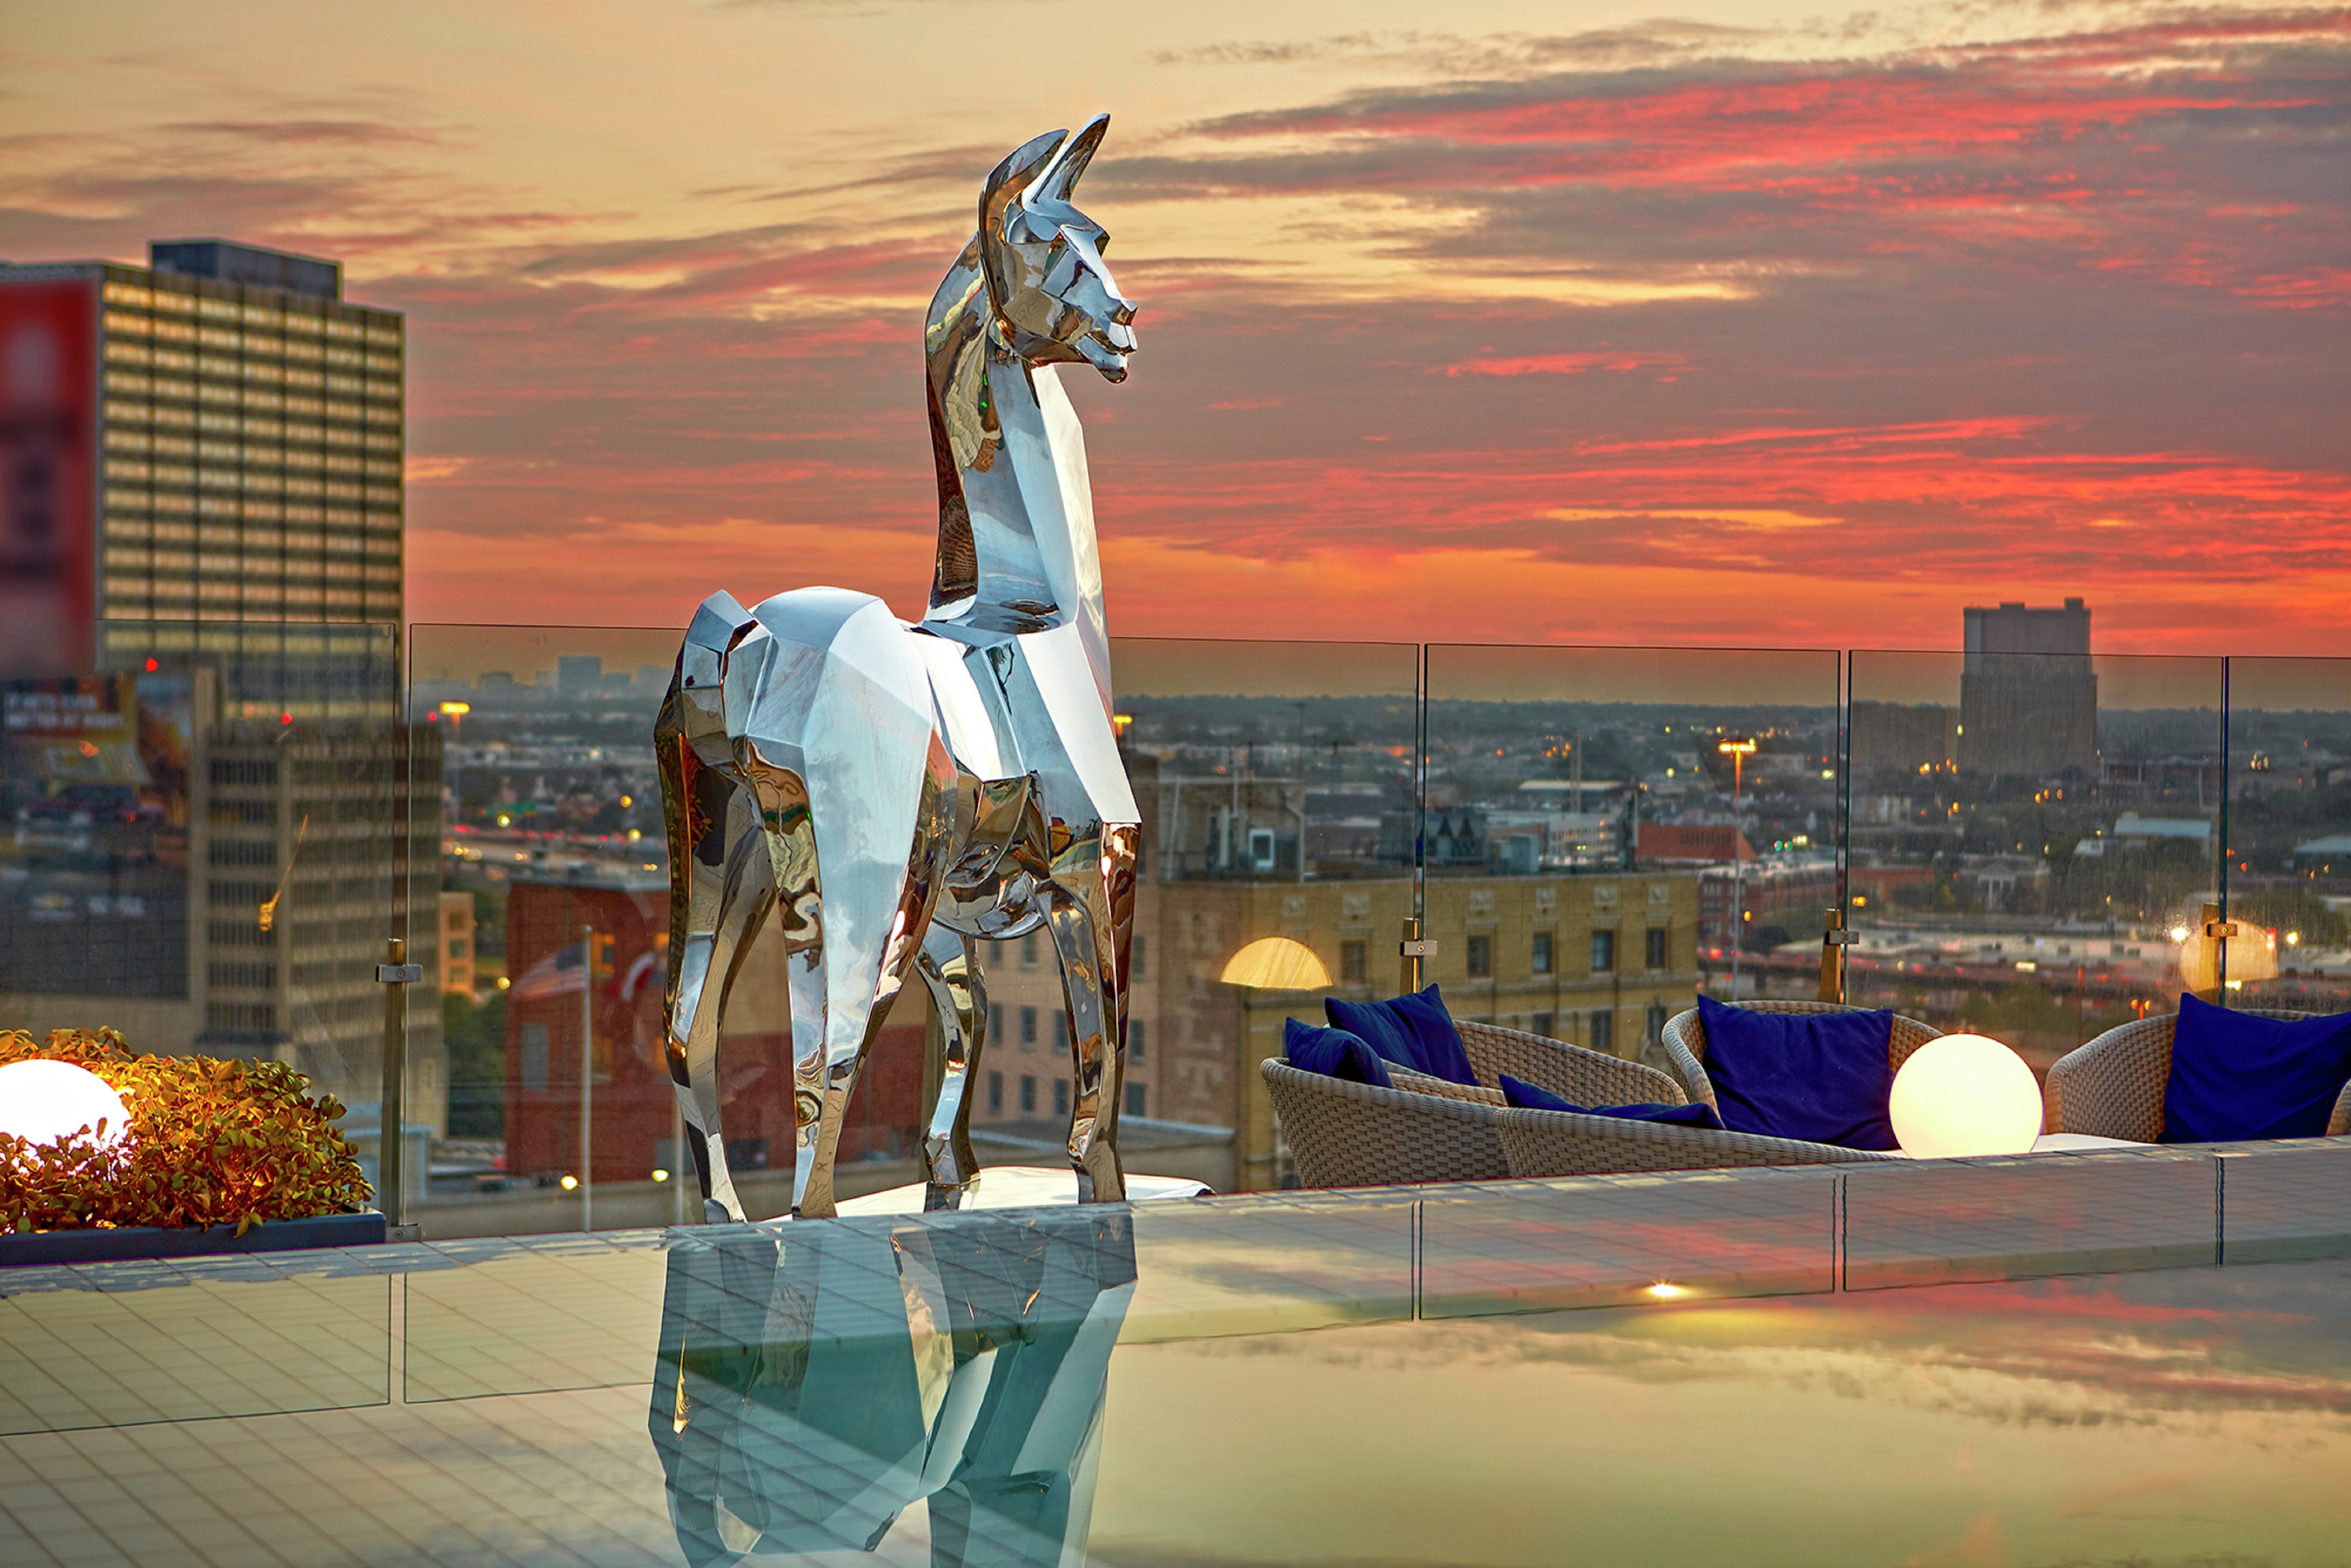 Llama Sculpture on Hotel Rooftop